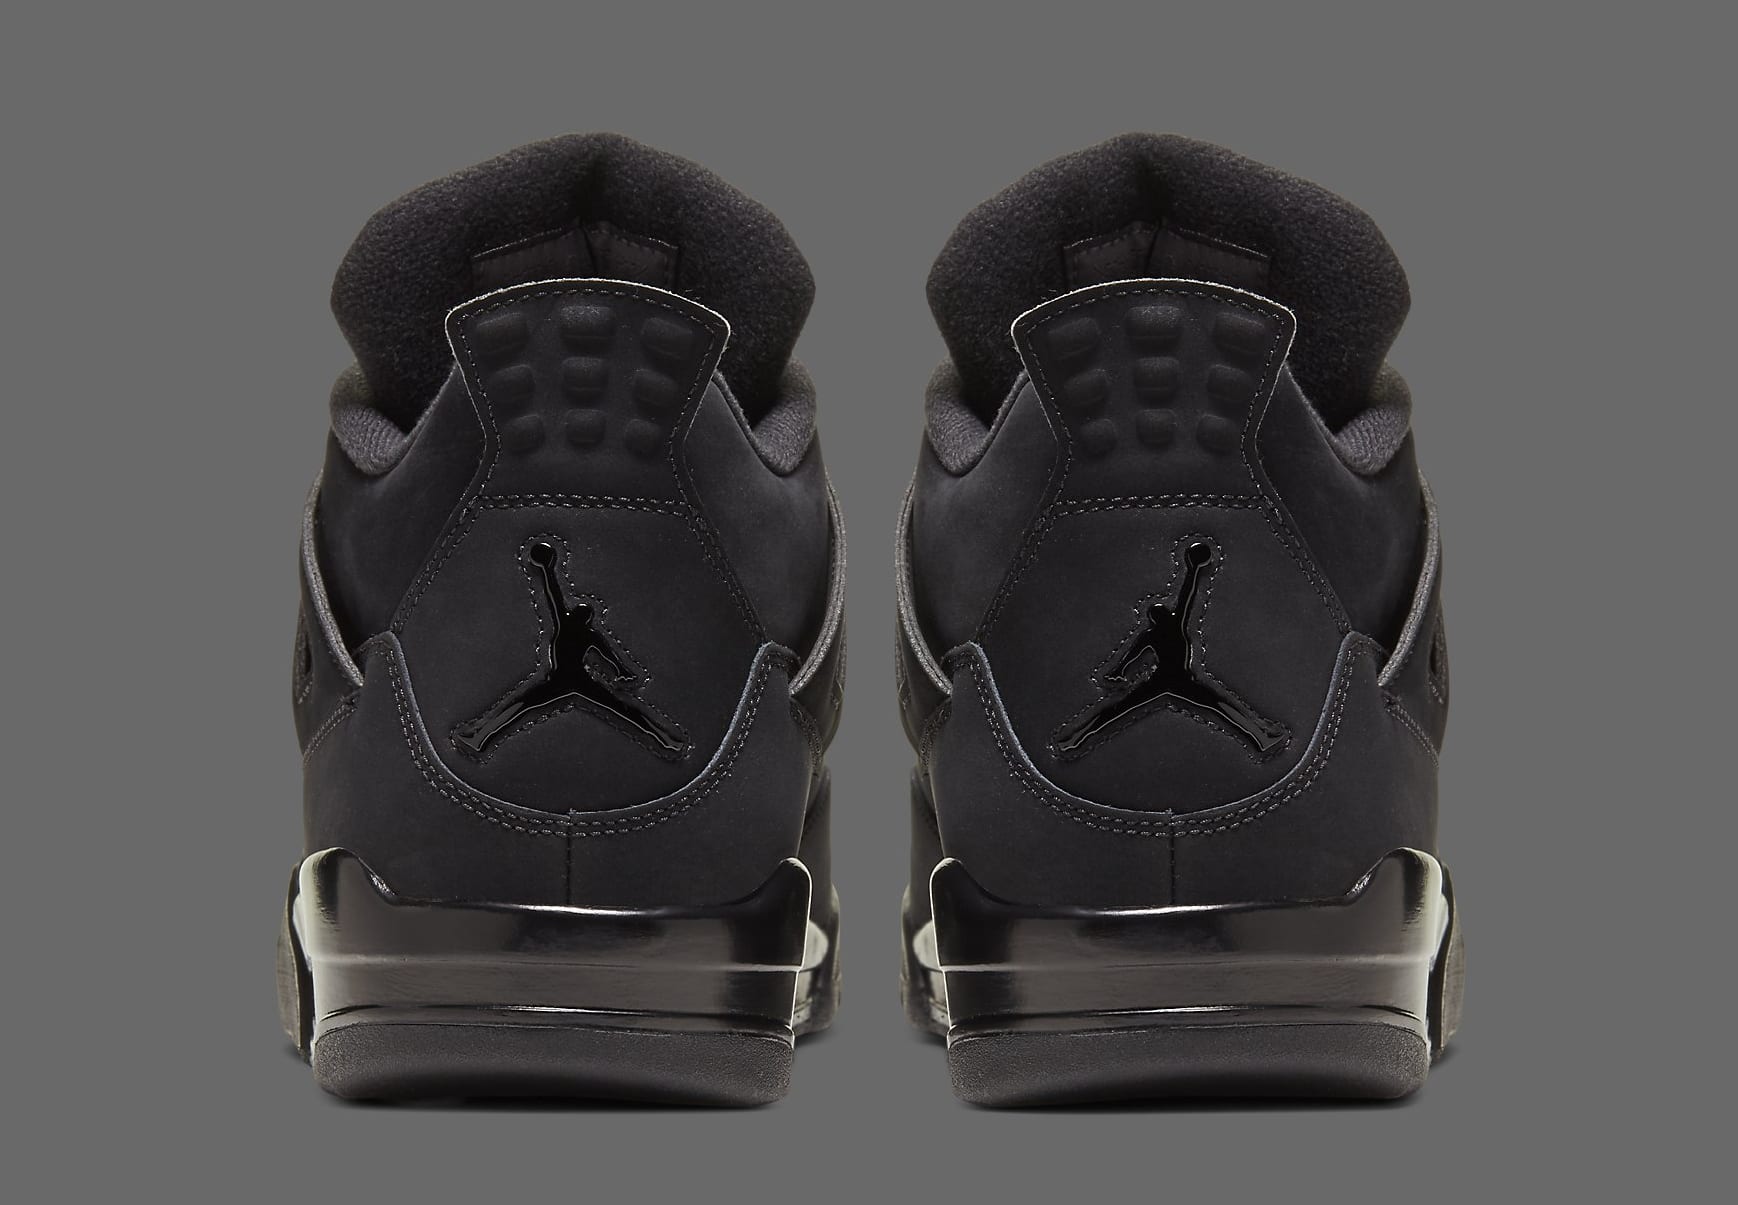 Get Air Jordan 4 Retro Black Cat (2020) CU1110 - Nike air jordan v